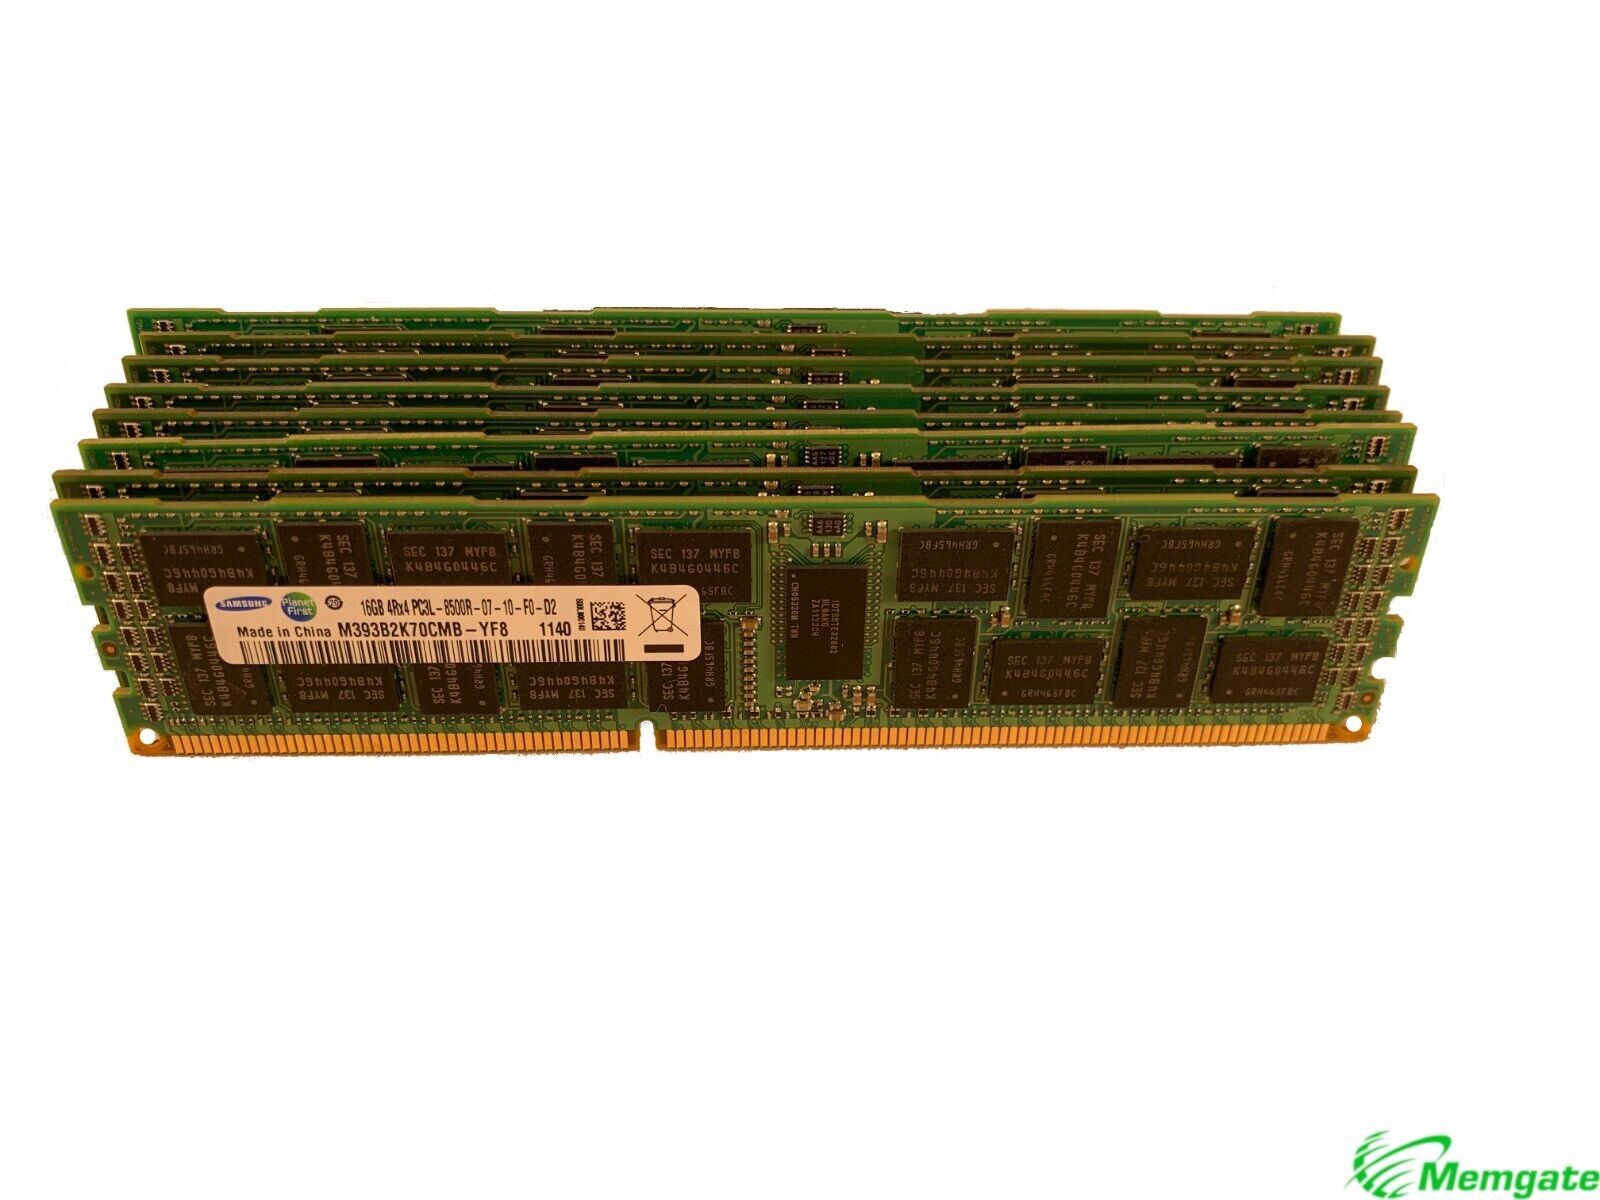 96GB (6 x16GB) Memory For Dell PowerEdge T410 T420 T610 T710